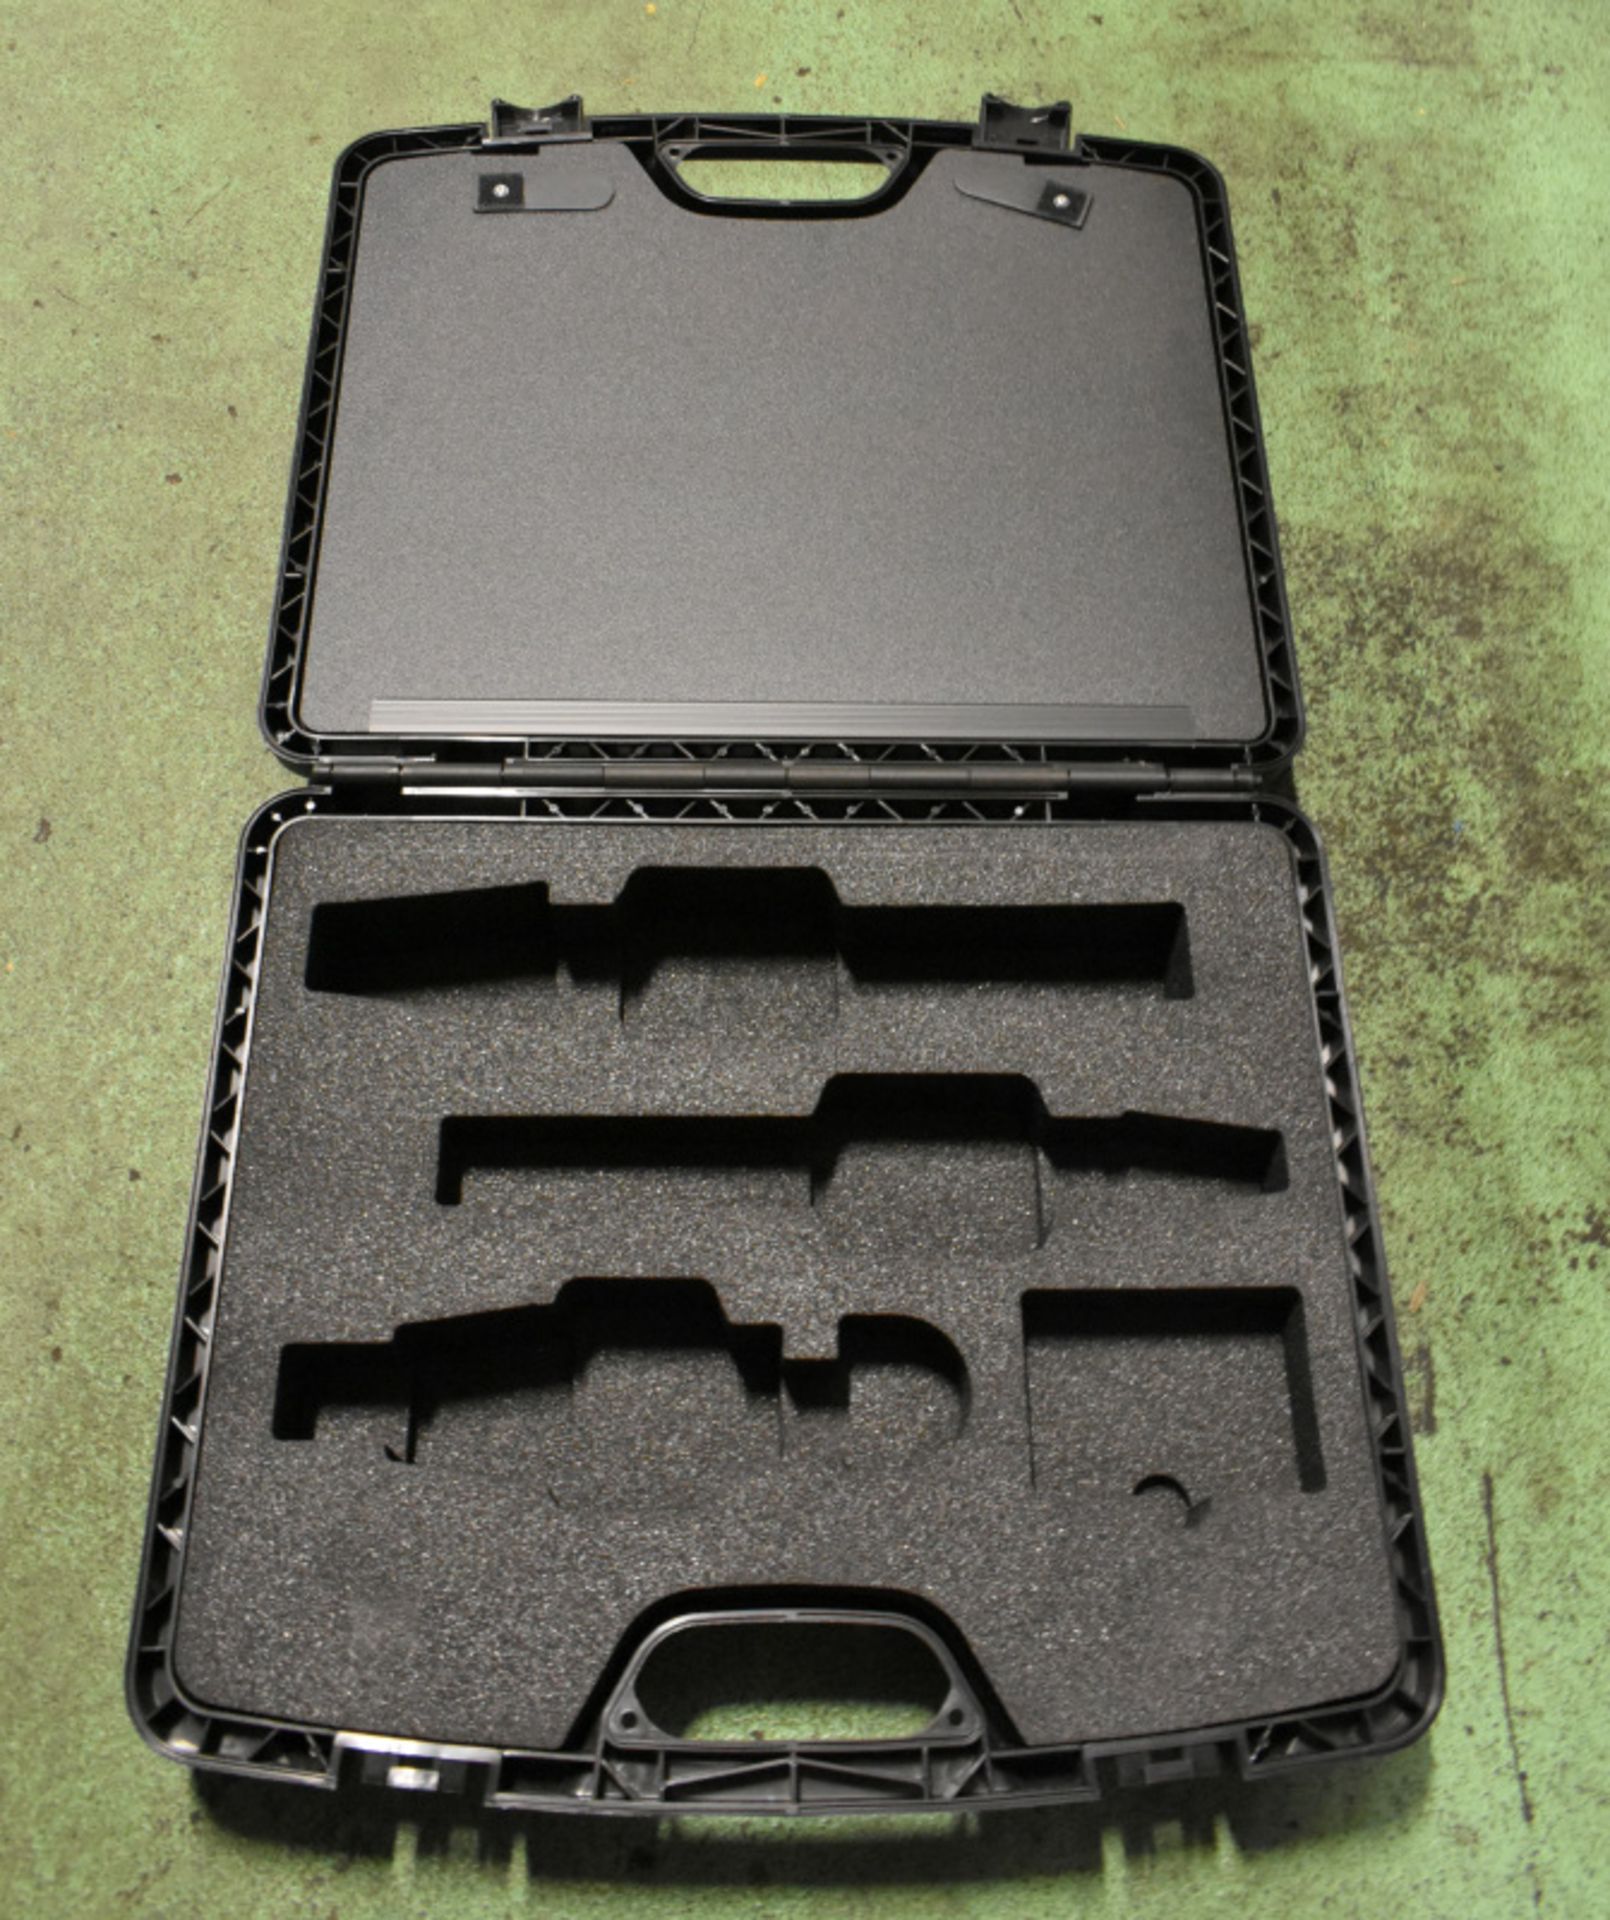 2x Plastic Cases - L 500mm x W 450mm x H 200mm - Image 4 of 4